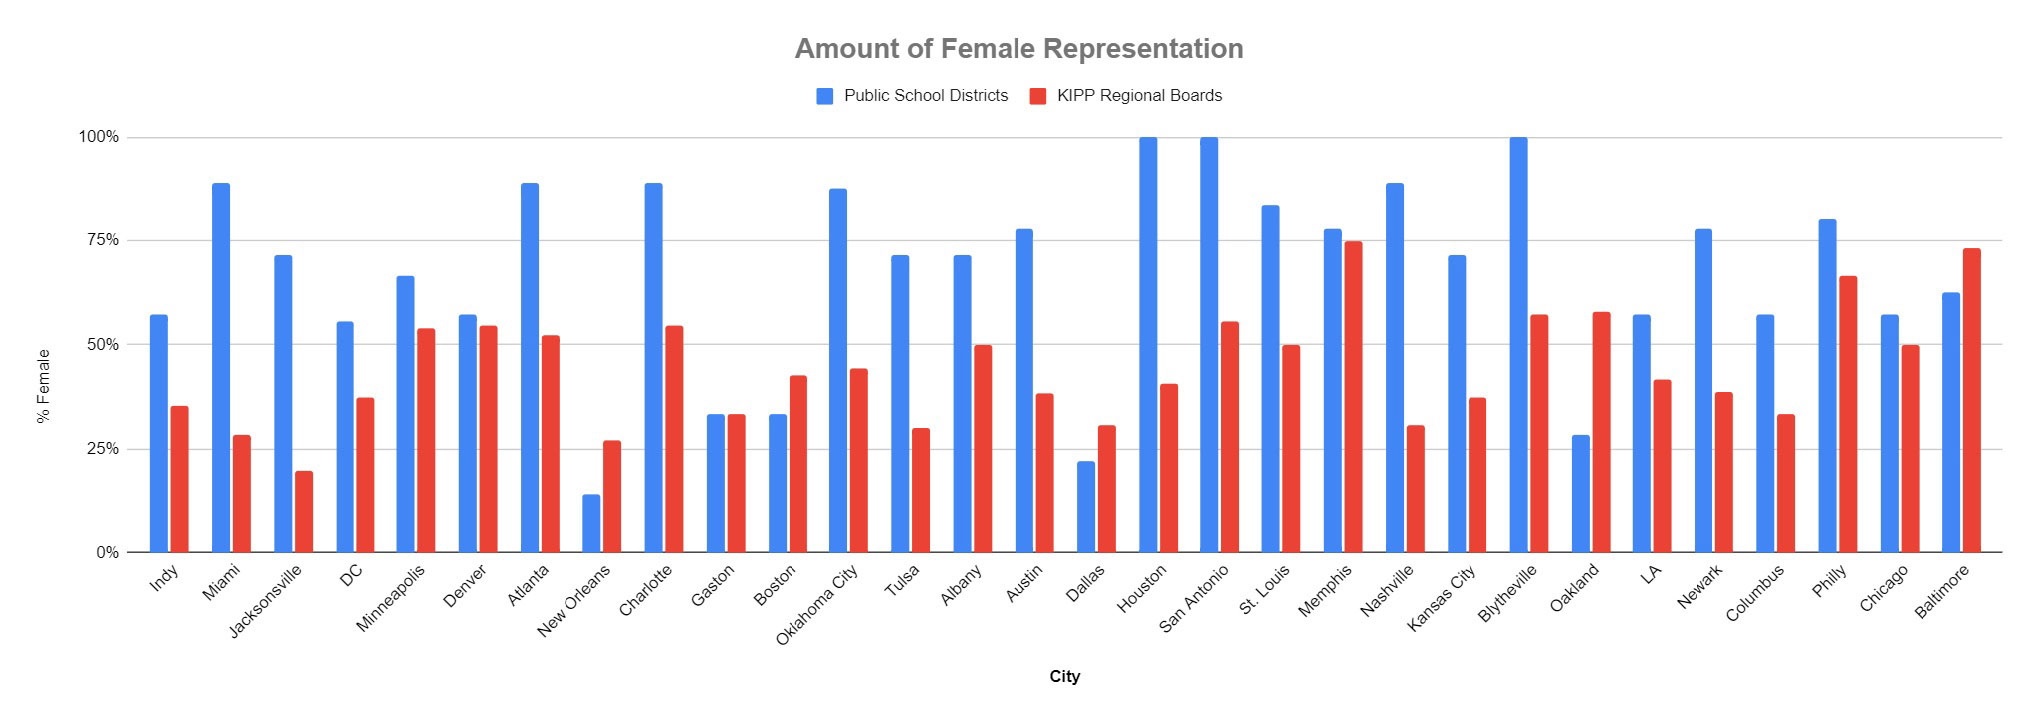 Amount of Female Representation